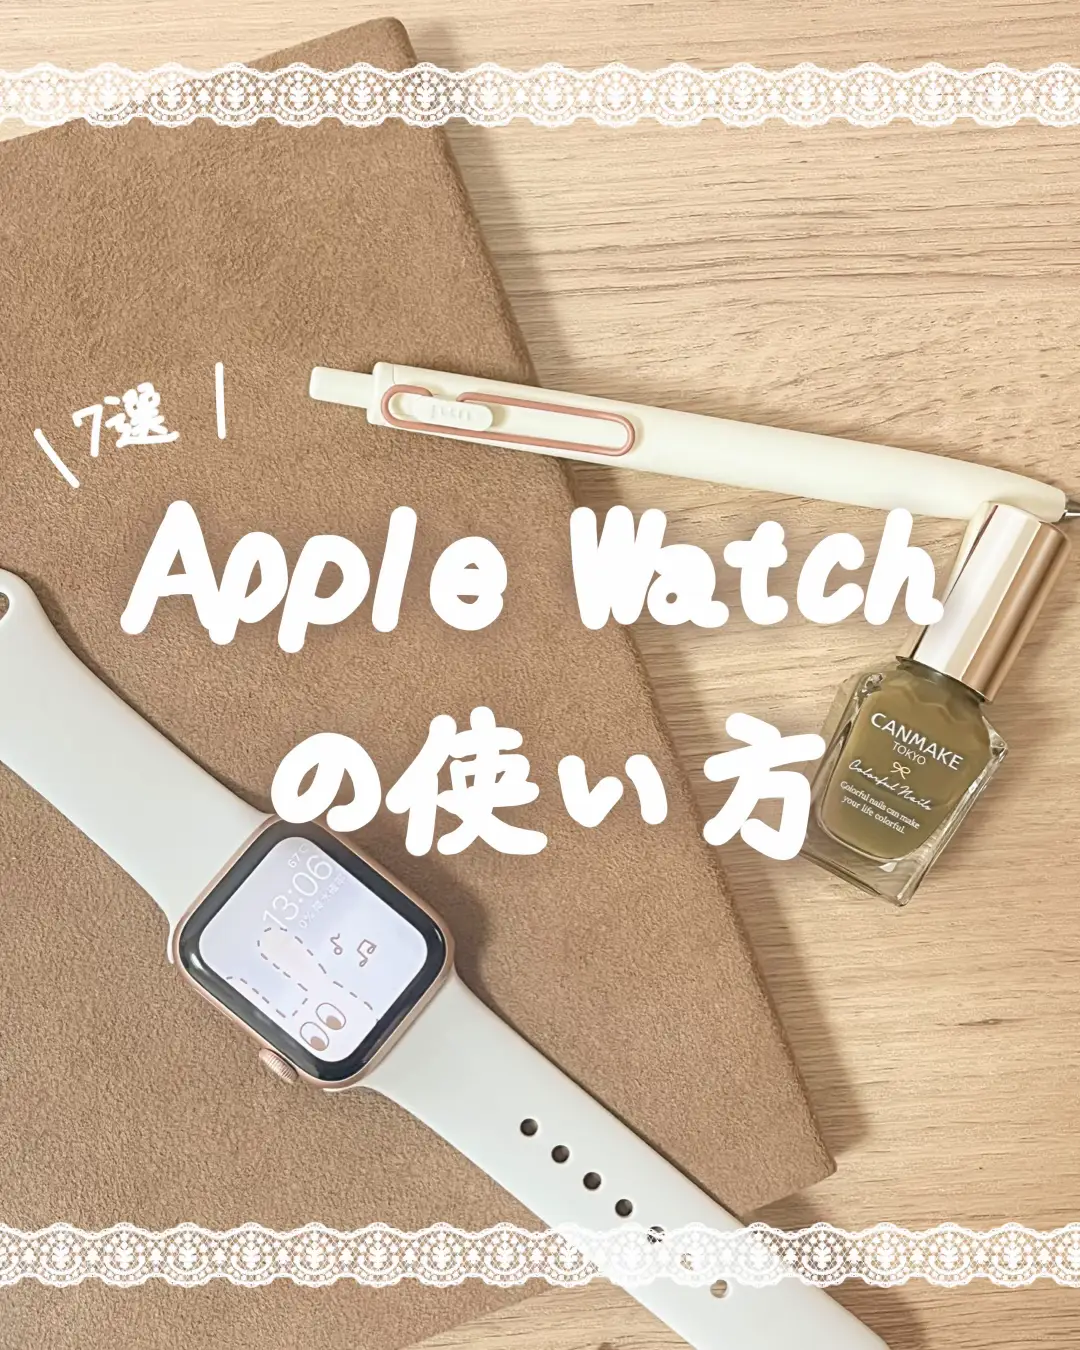 Apple Watch Series3 - Lemon8検索